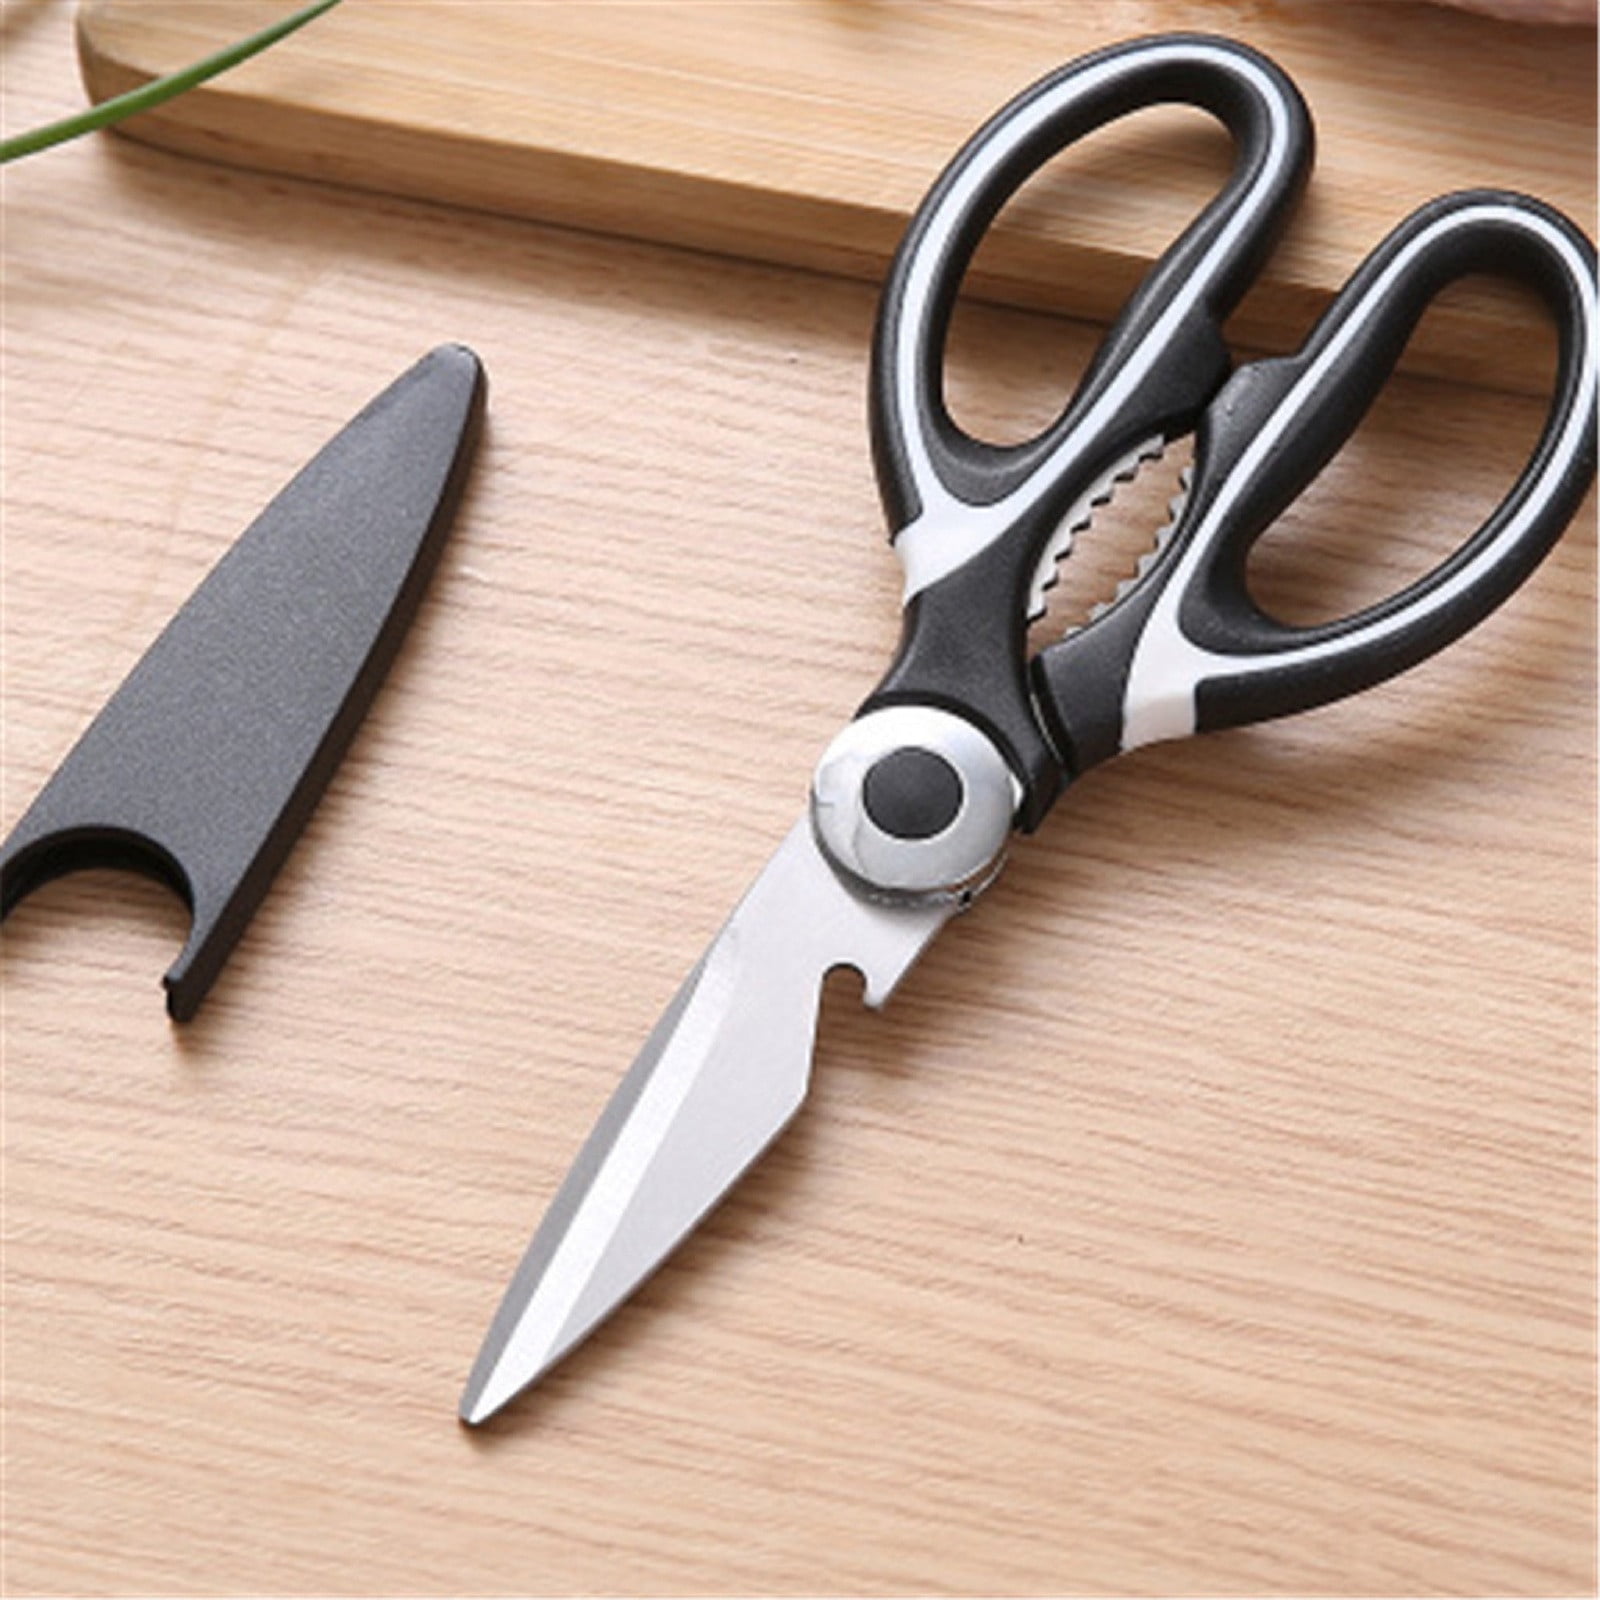 Thsue Kitchen Shears Super Sharp Stainless Steel Multi-function Kitchen Scissors, Size: 21